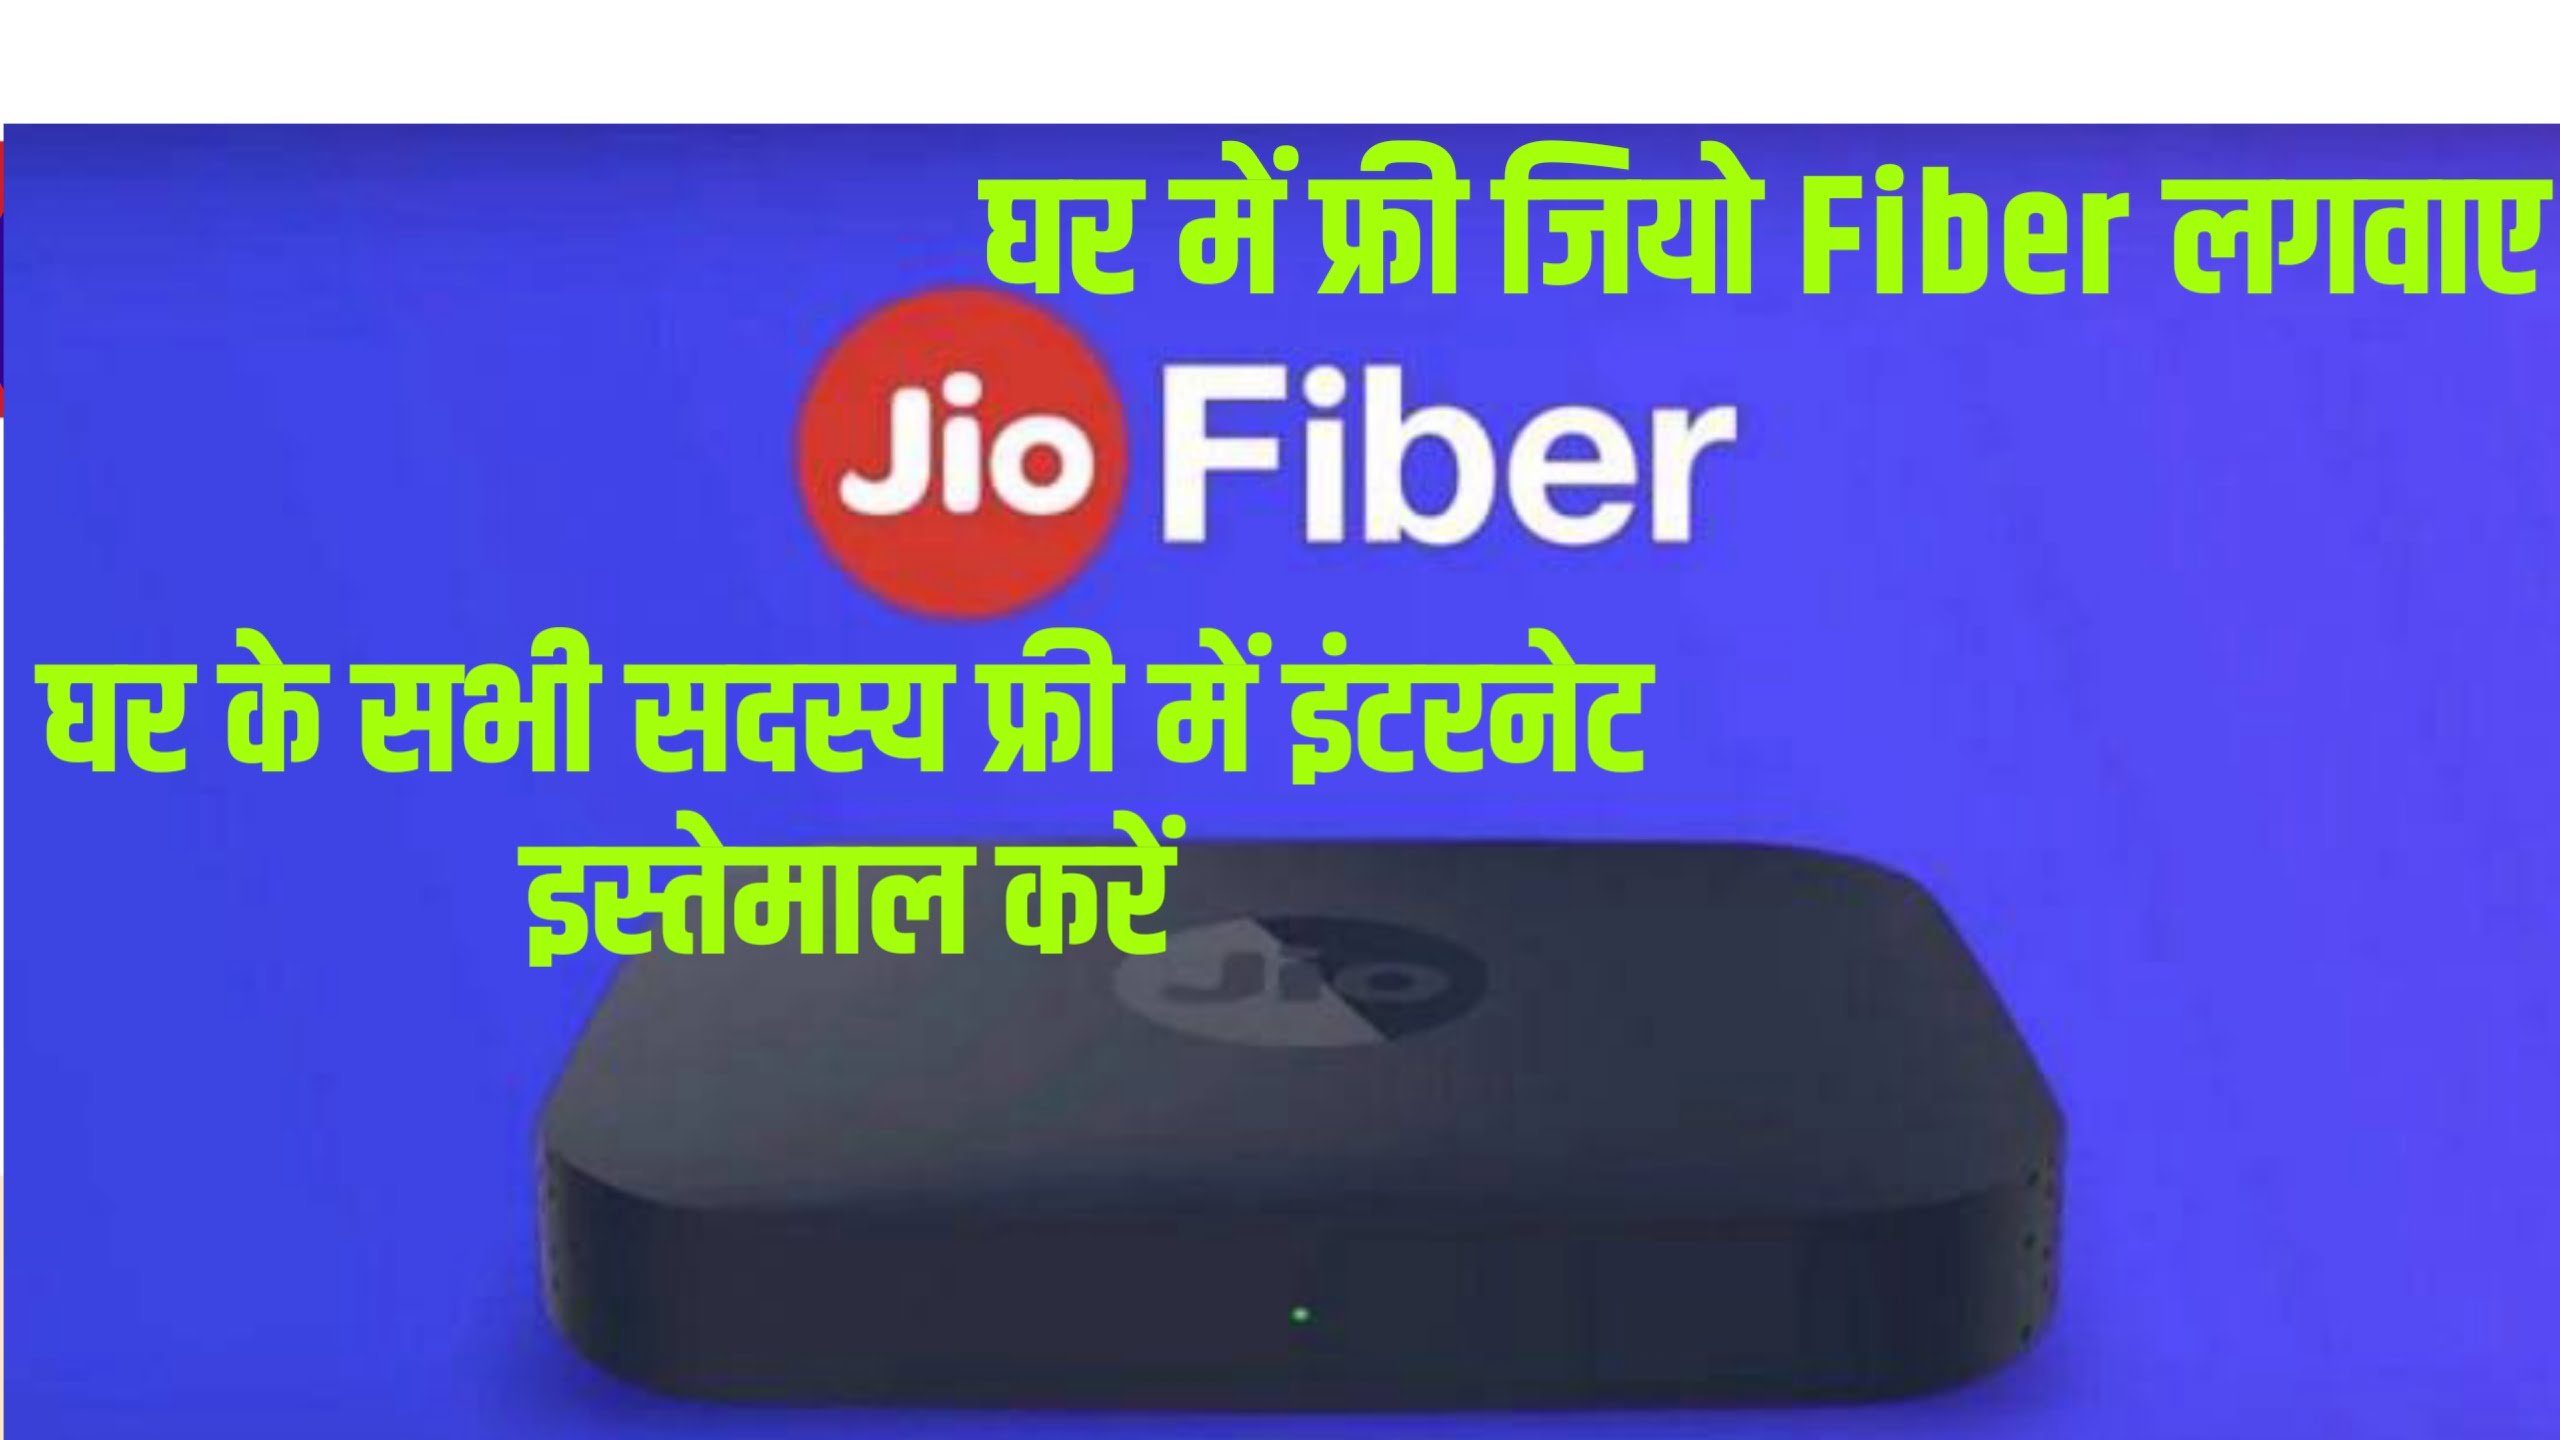 Jio fiber free connection